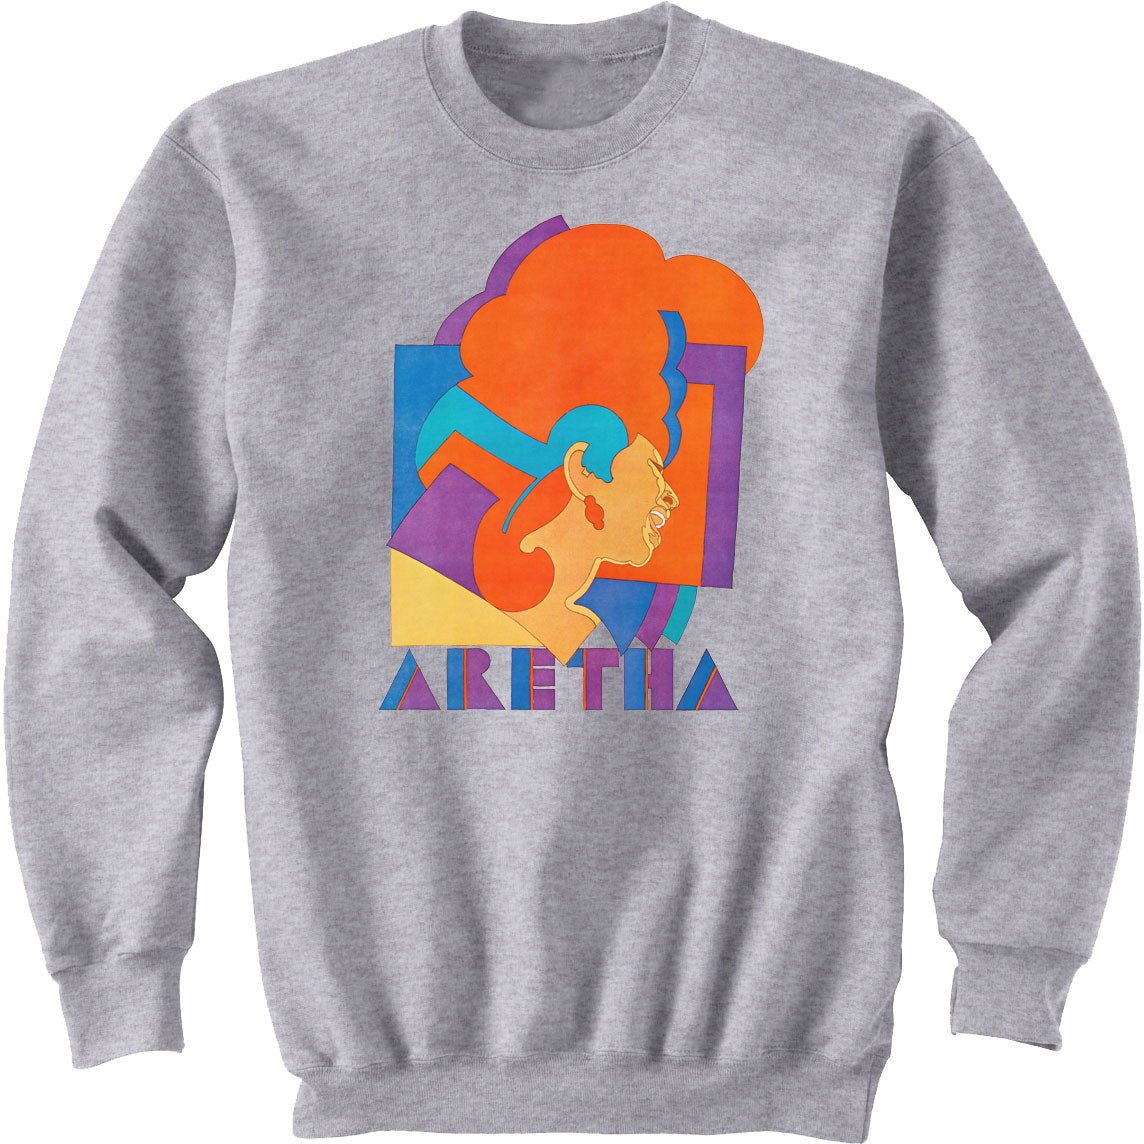 Aretha Franklin Sweat Shirt - Milton Glaser Poster Sweat Shirt